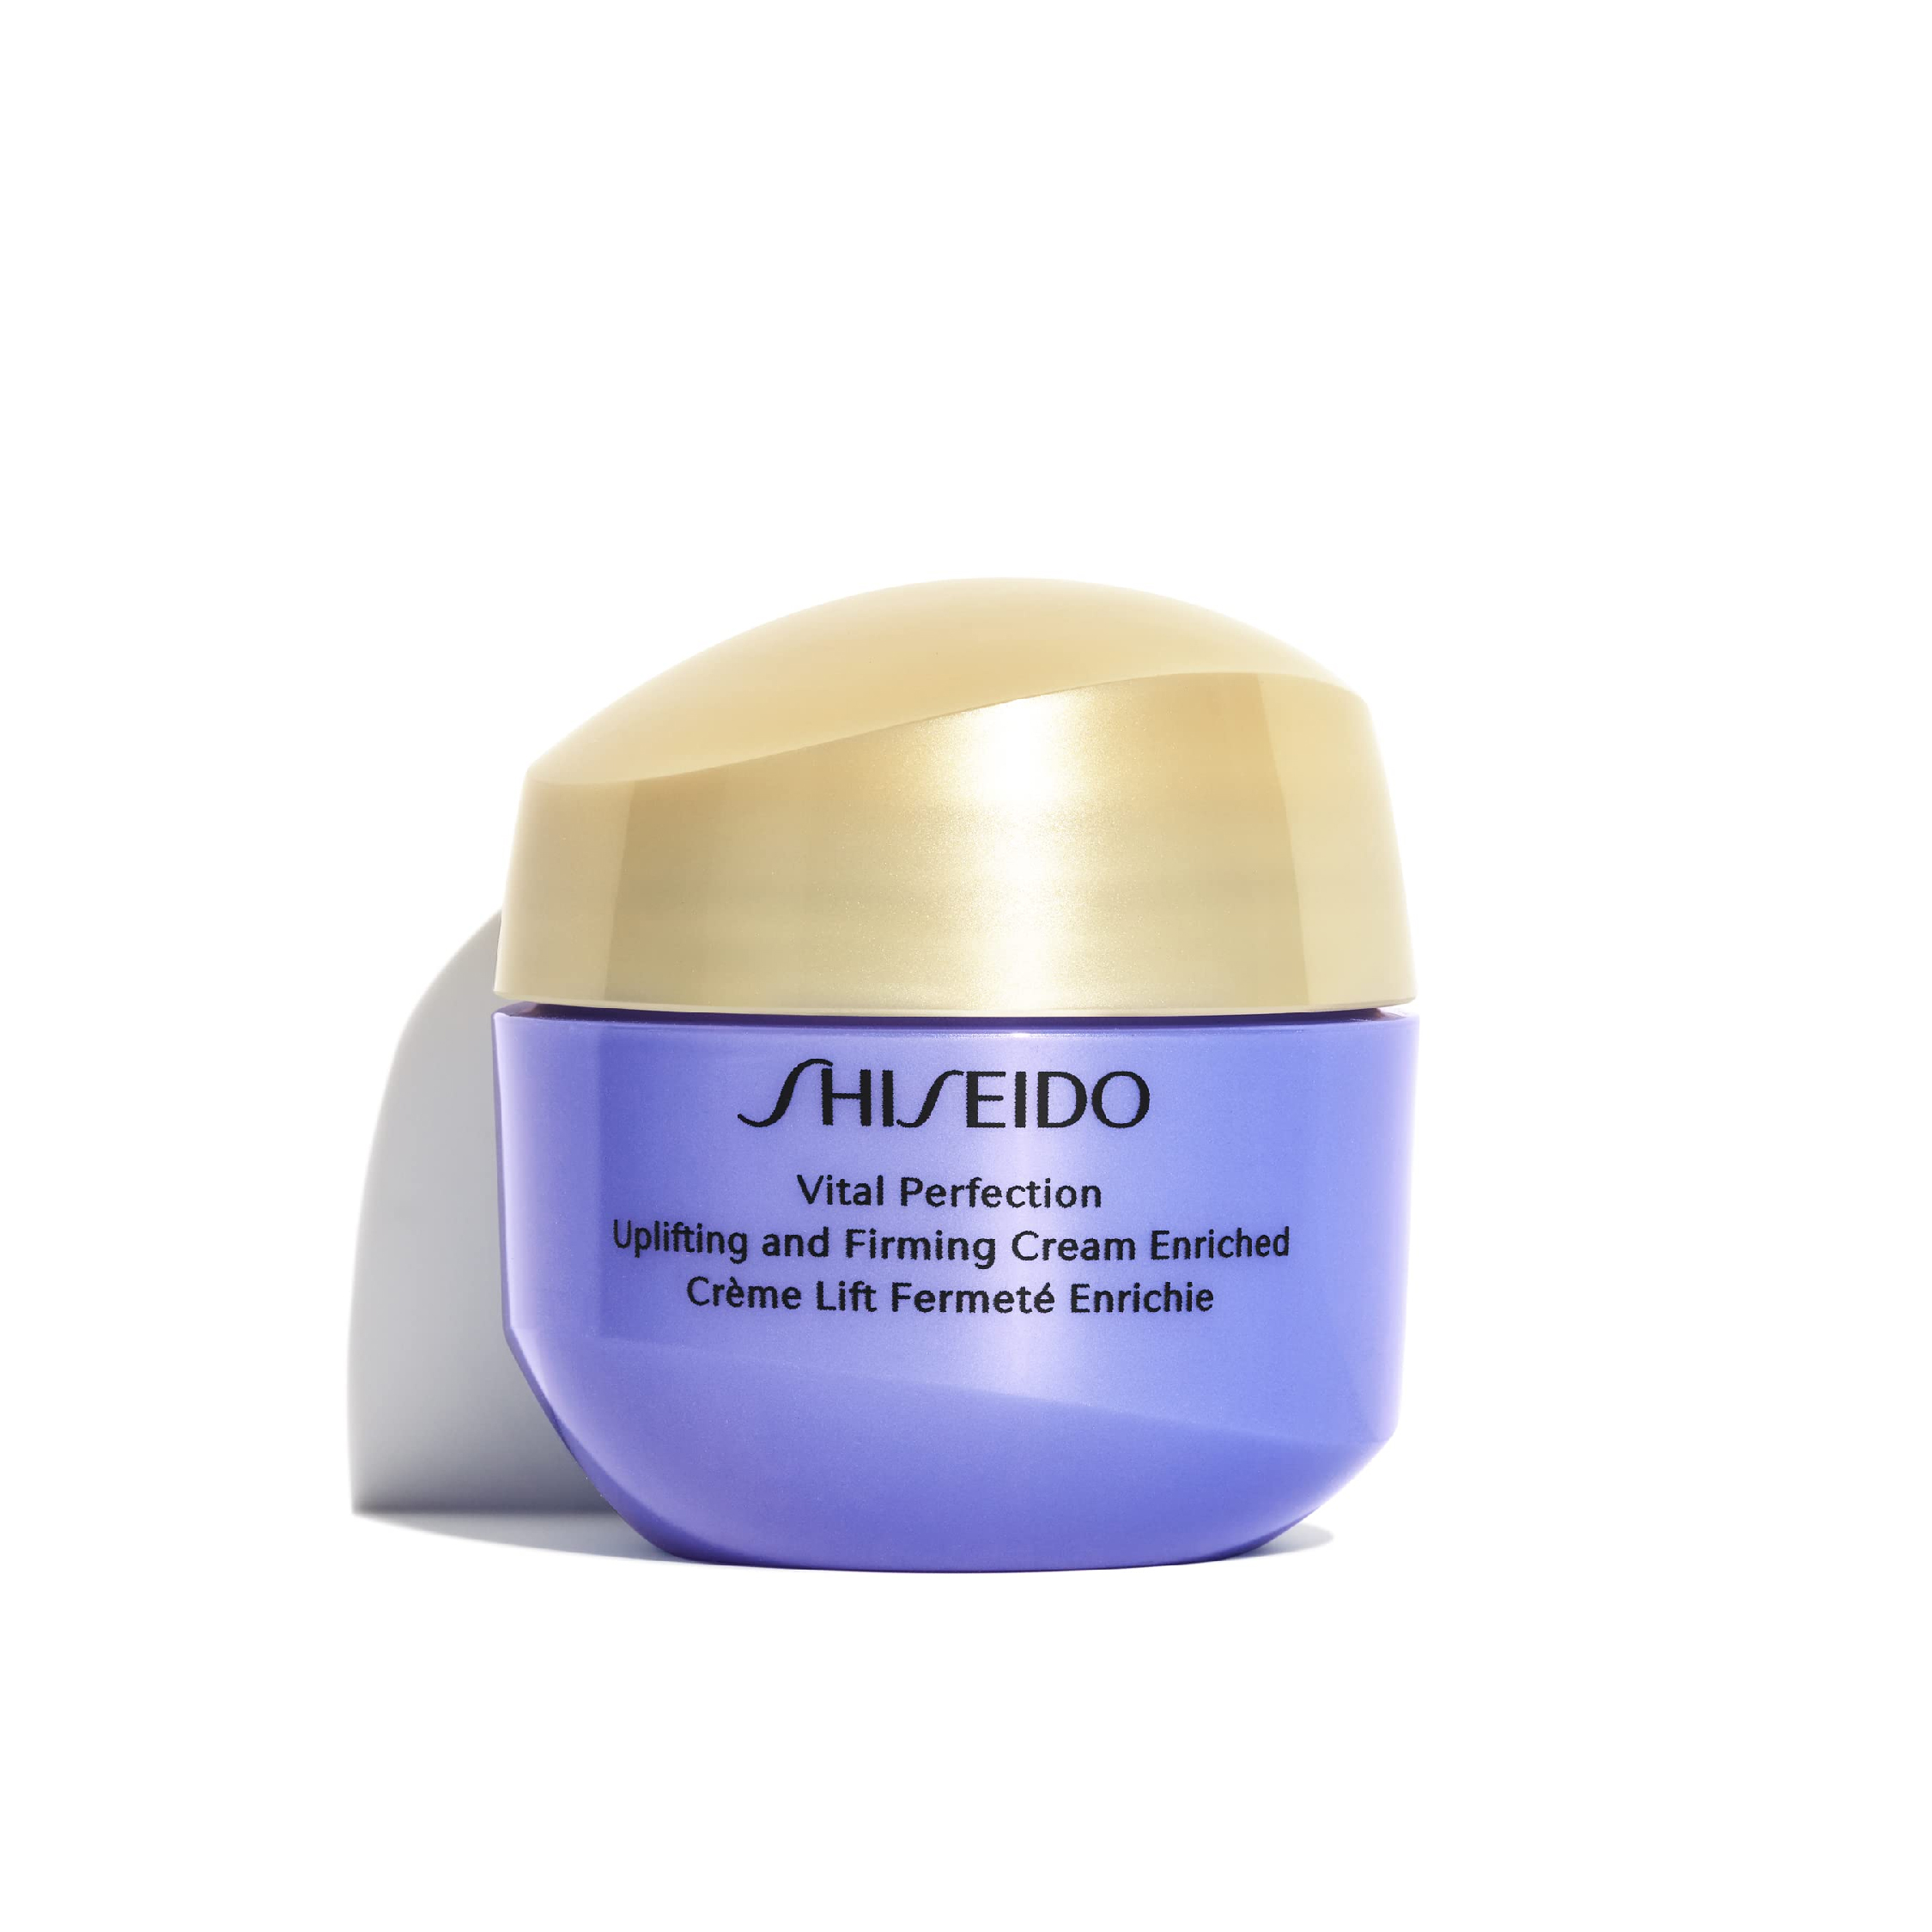 Shiseido Vital Perfection Uplifting and Firming Cream 15ml